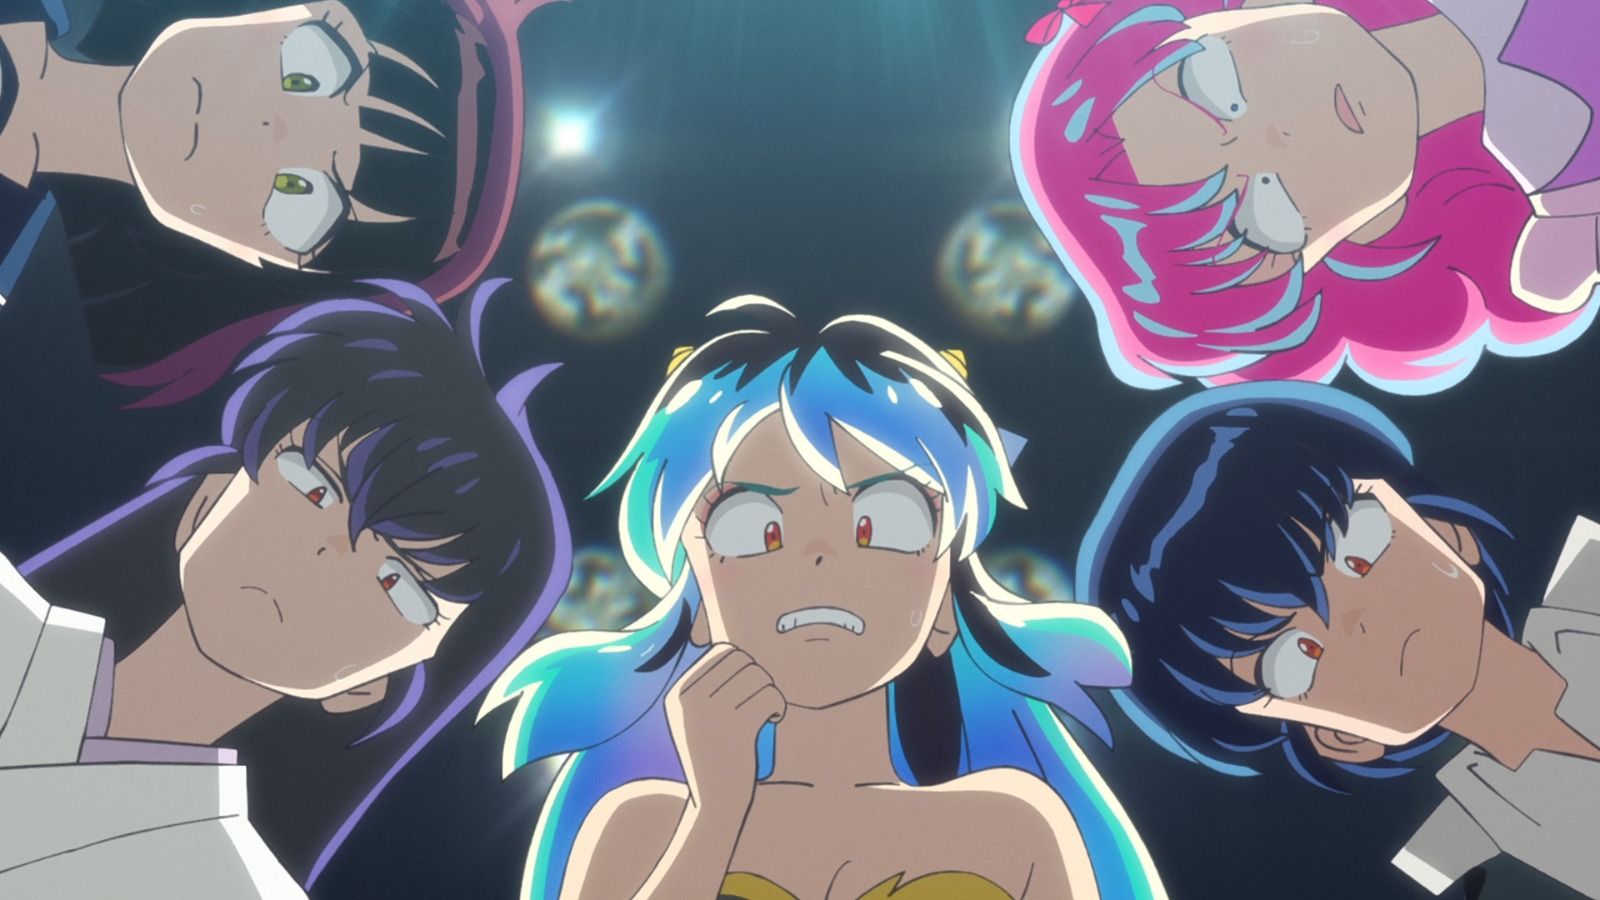 TAMAT! Nonton Anime Urusei Yatsura (2022) Episode 23 Sub Indo: Kontestasi Memperebutkan Gelar Ratu Tomo 1.